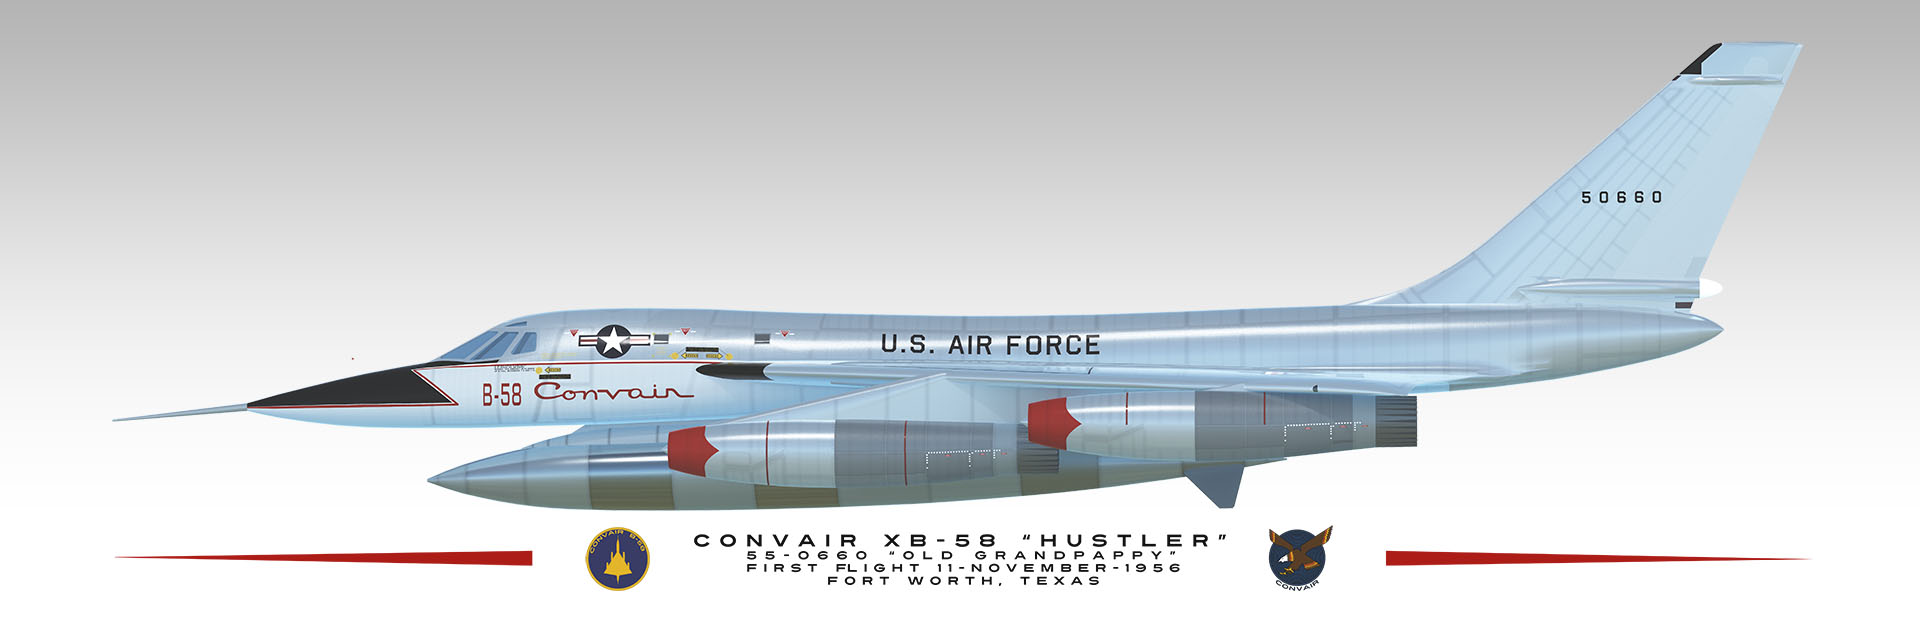 Convair-XB-58-Hustler-50660-Small-John-M